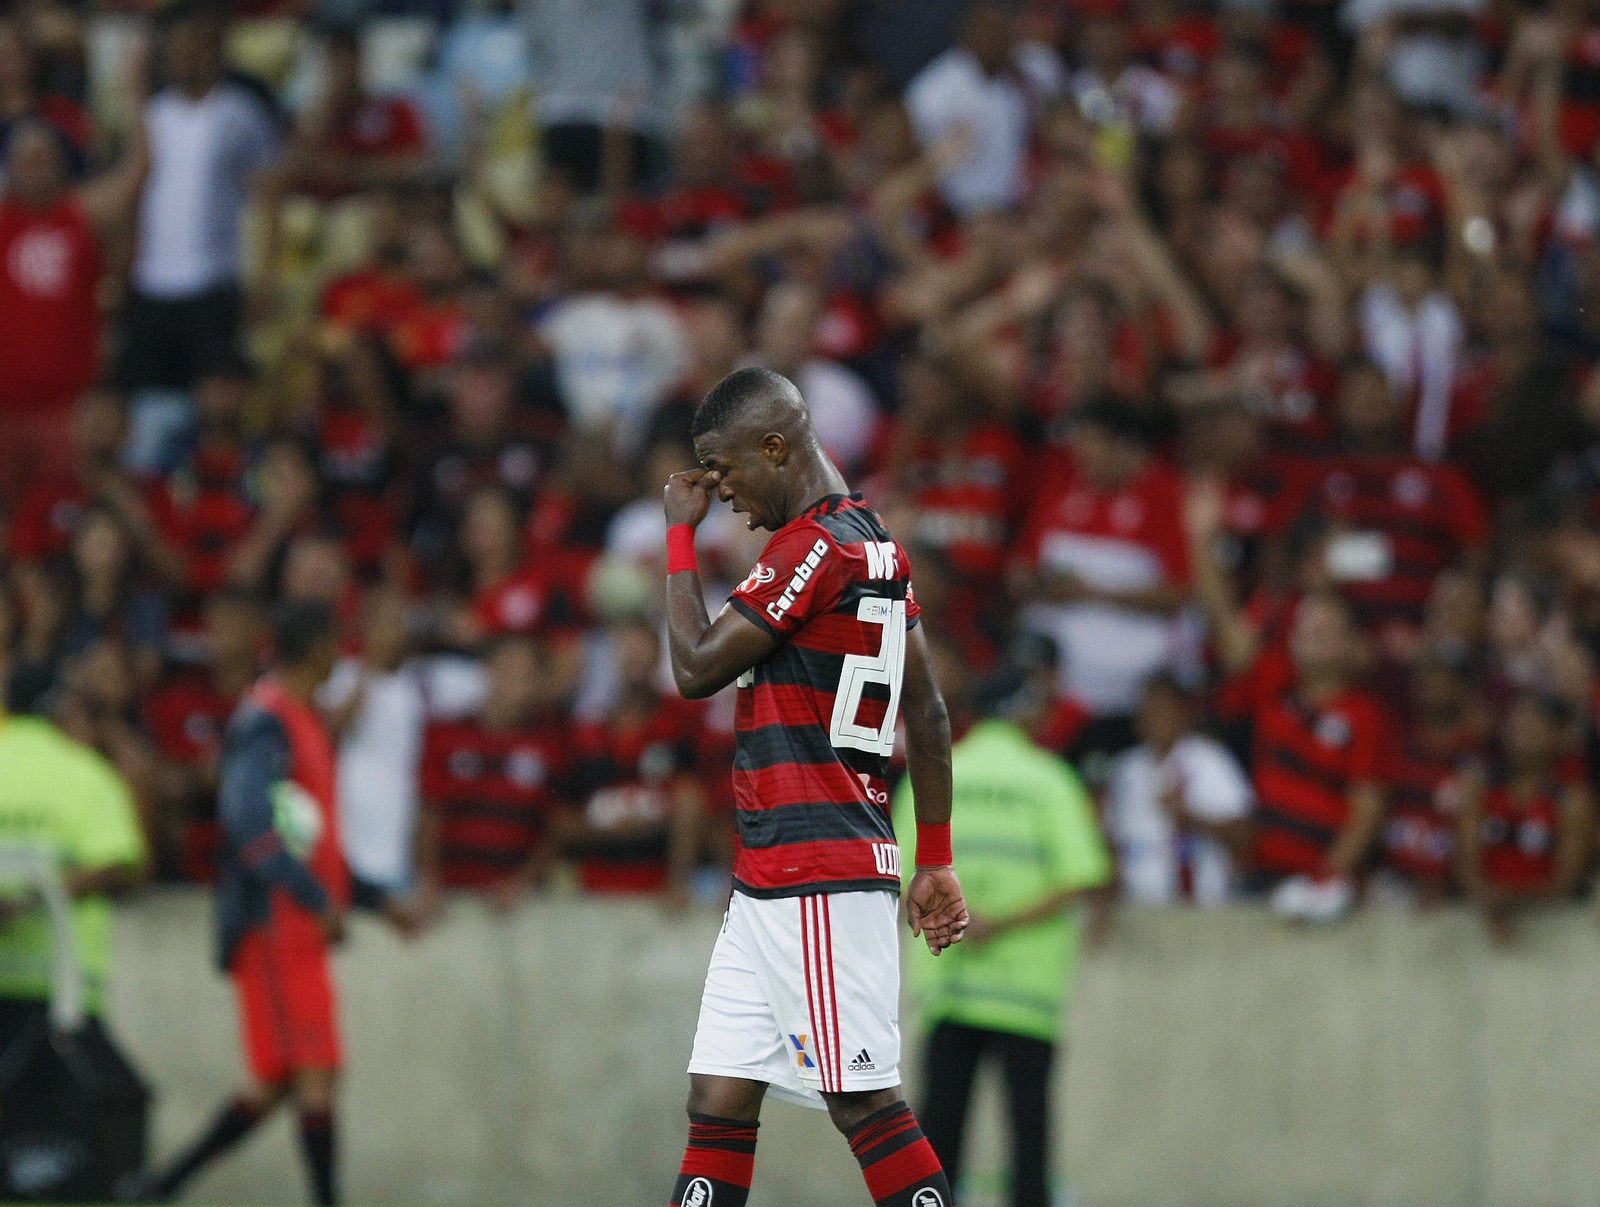 Atacante do Flamengo é alvo de racismo nas redes sociais